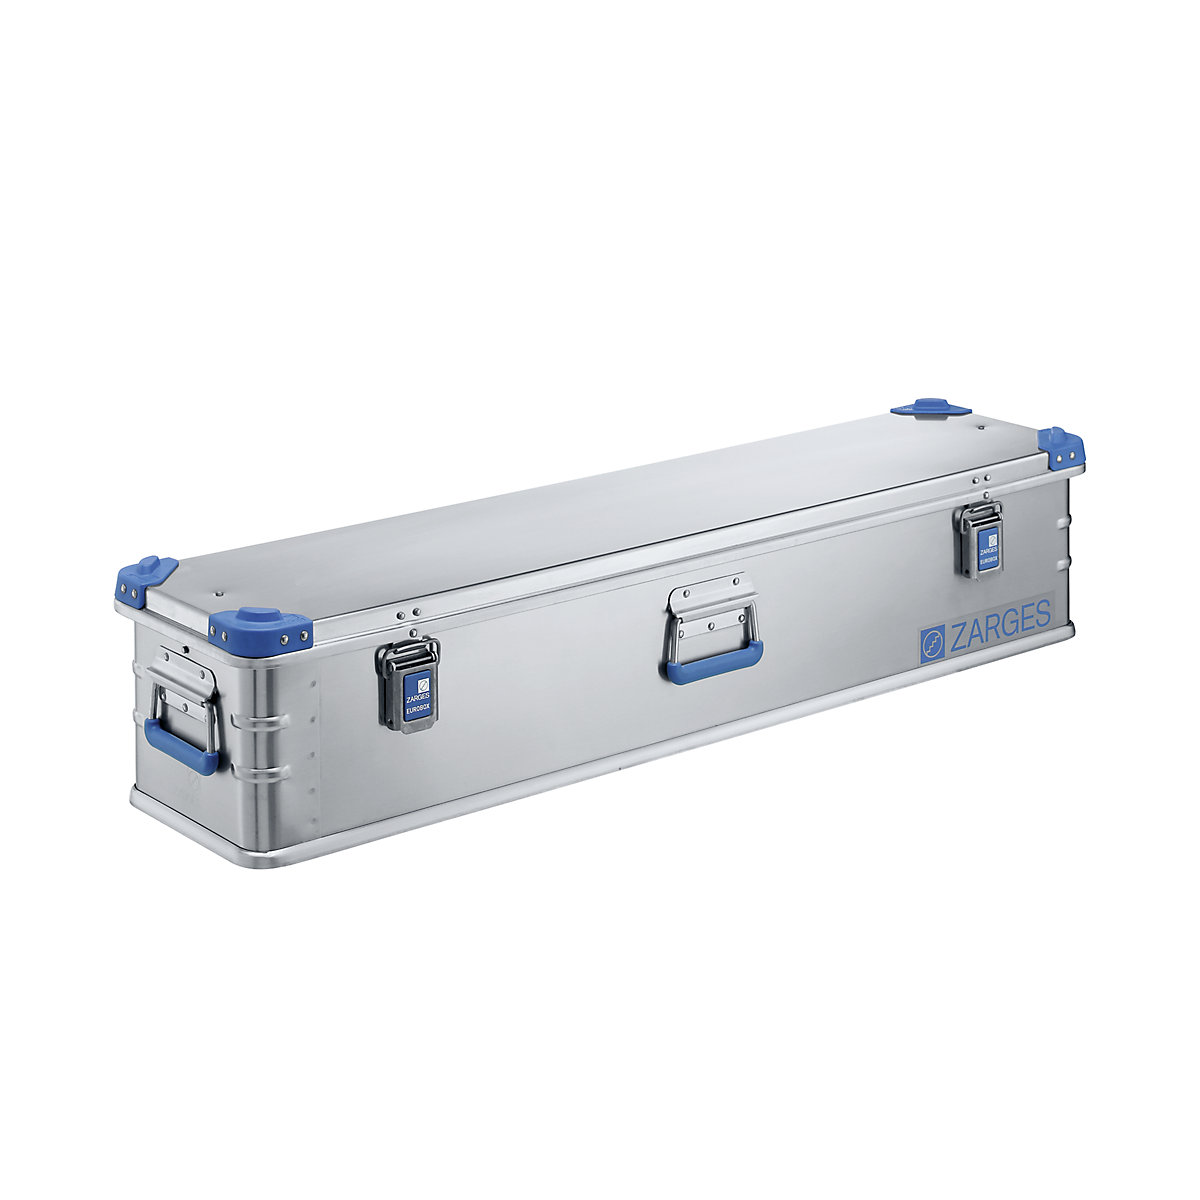 Aluminium universal box – ZARGES